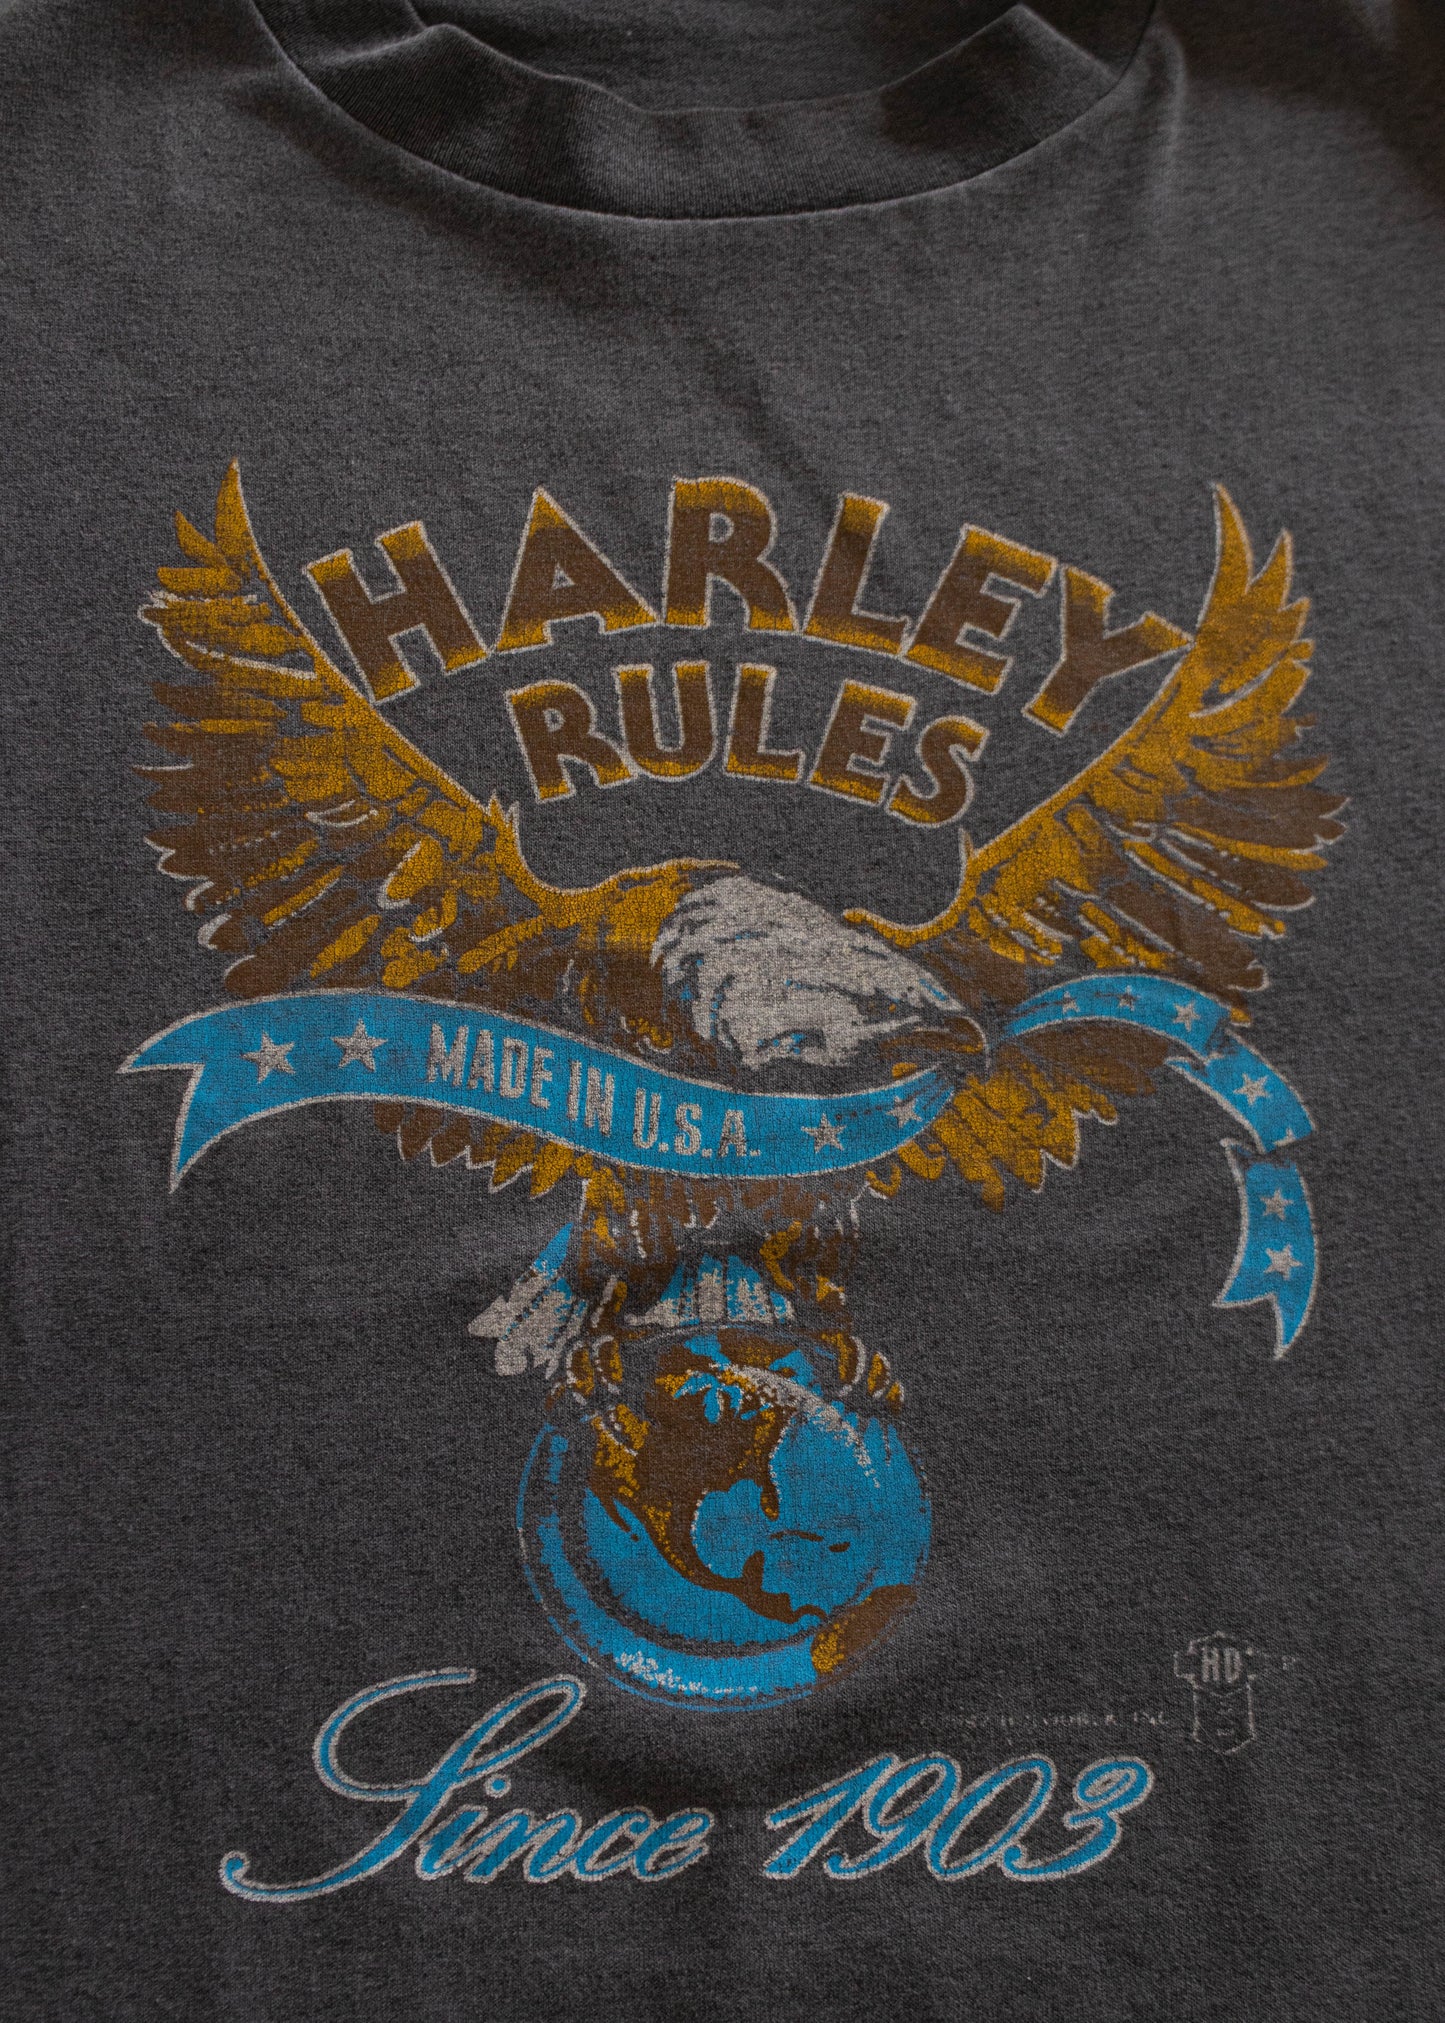 1987 "Harley Rules" Harley Davidson T-Shirt Size M/L